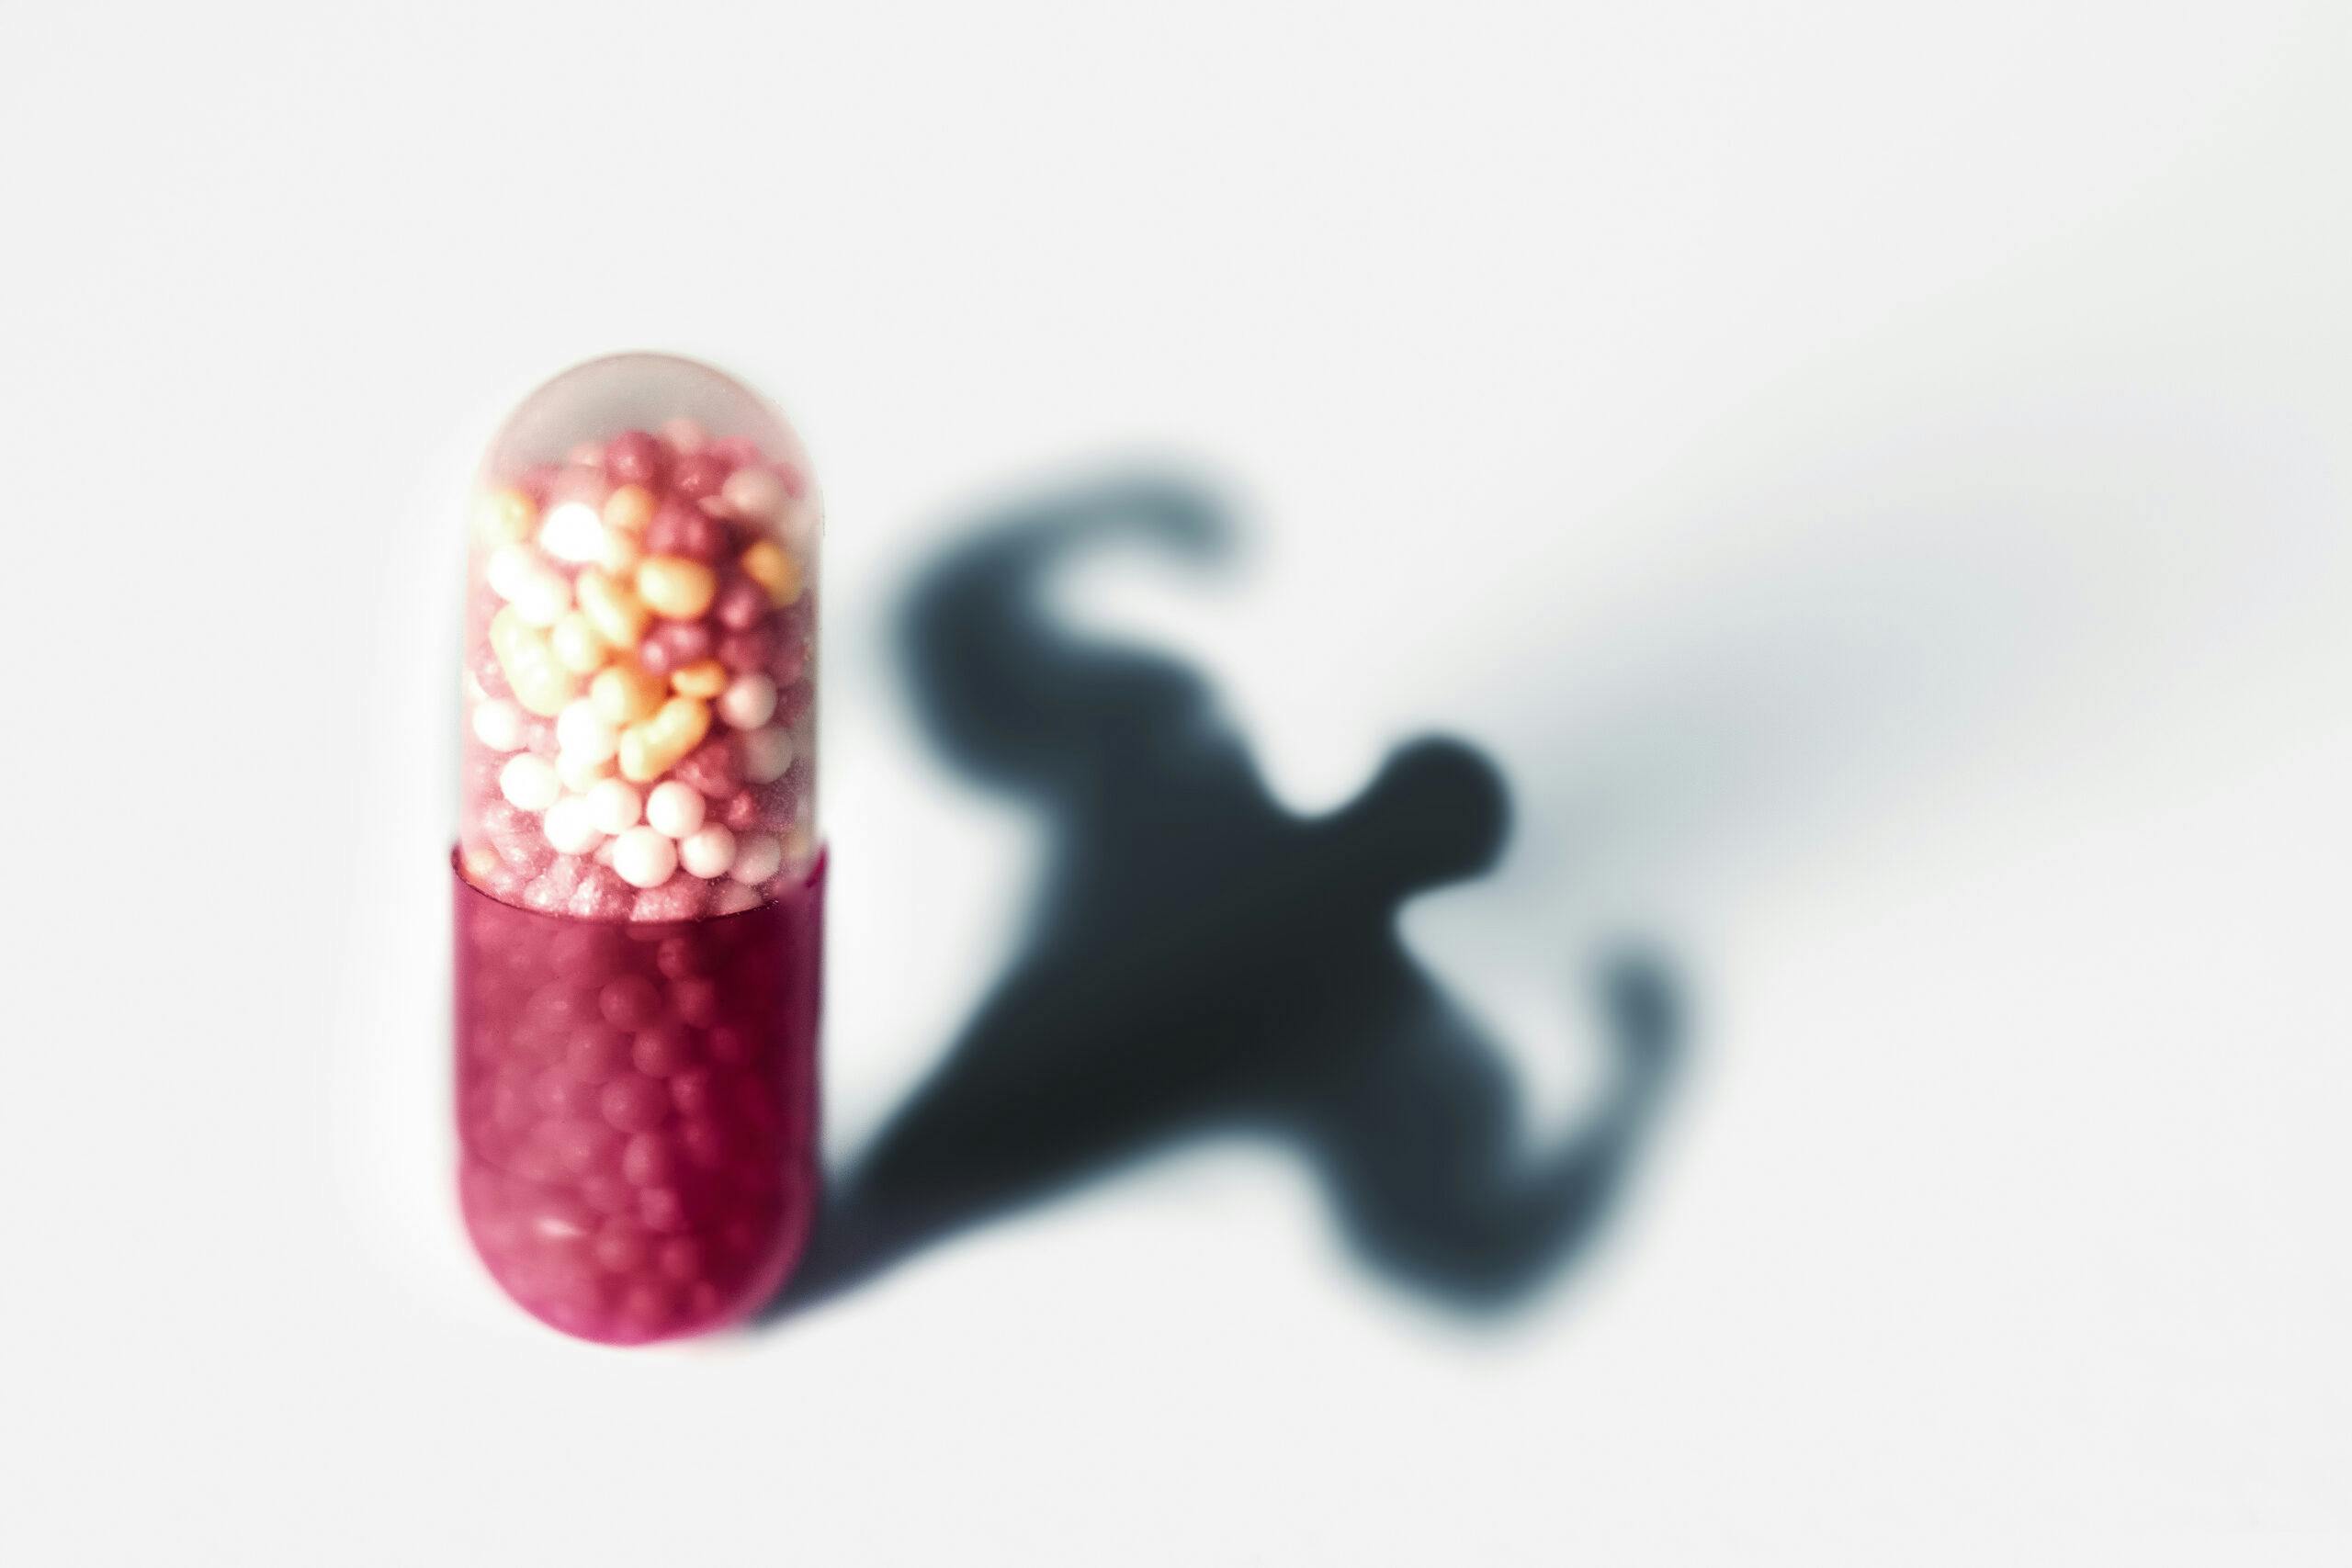 pill capsule muscular man symbol for medical drug abuse